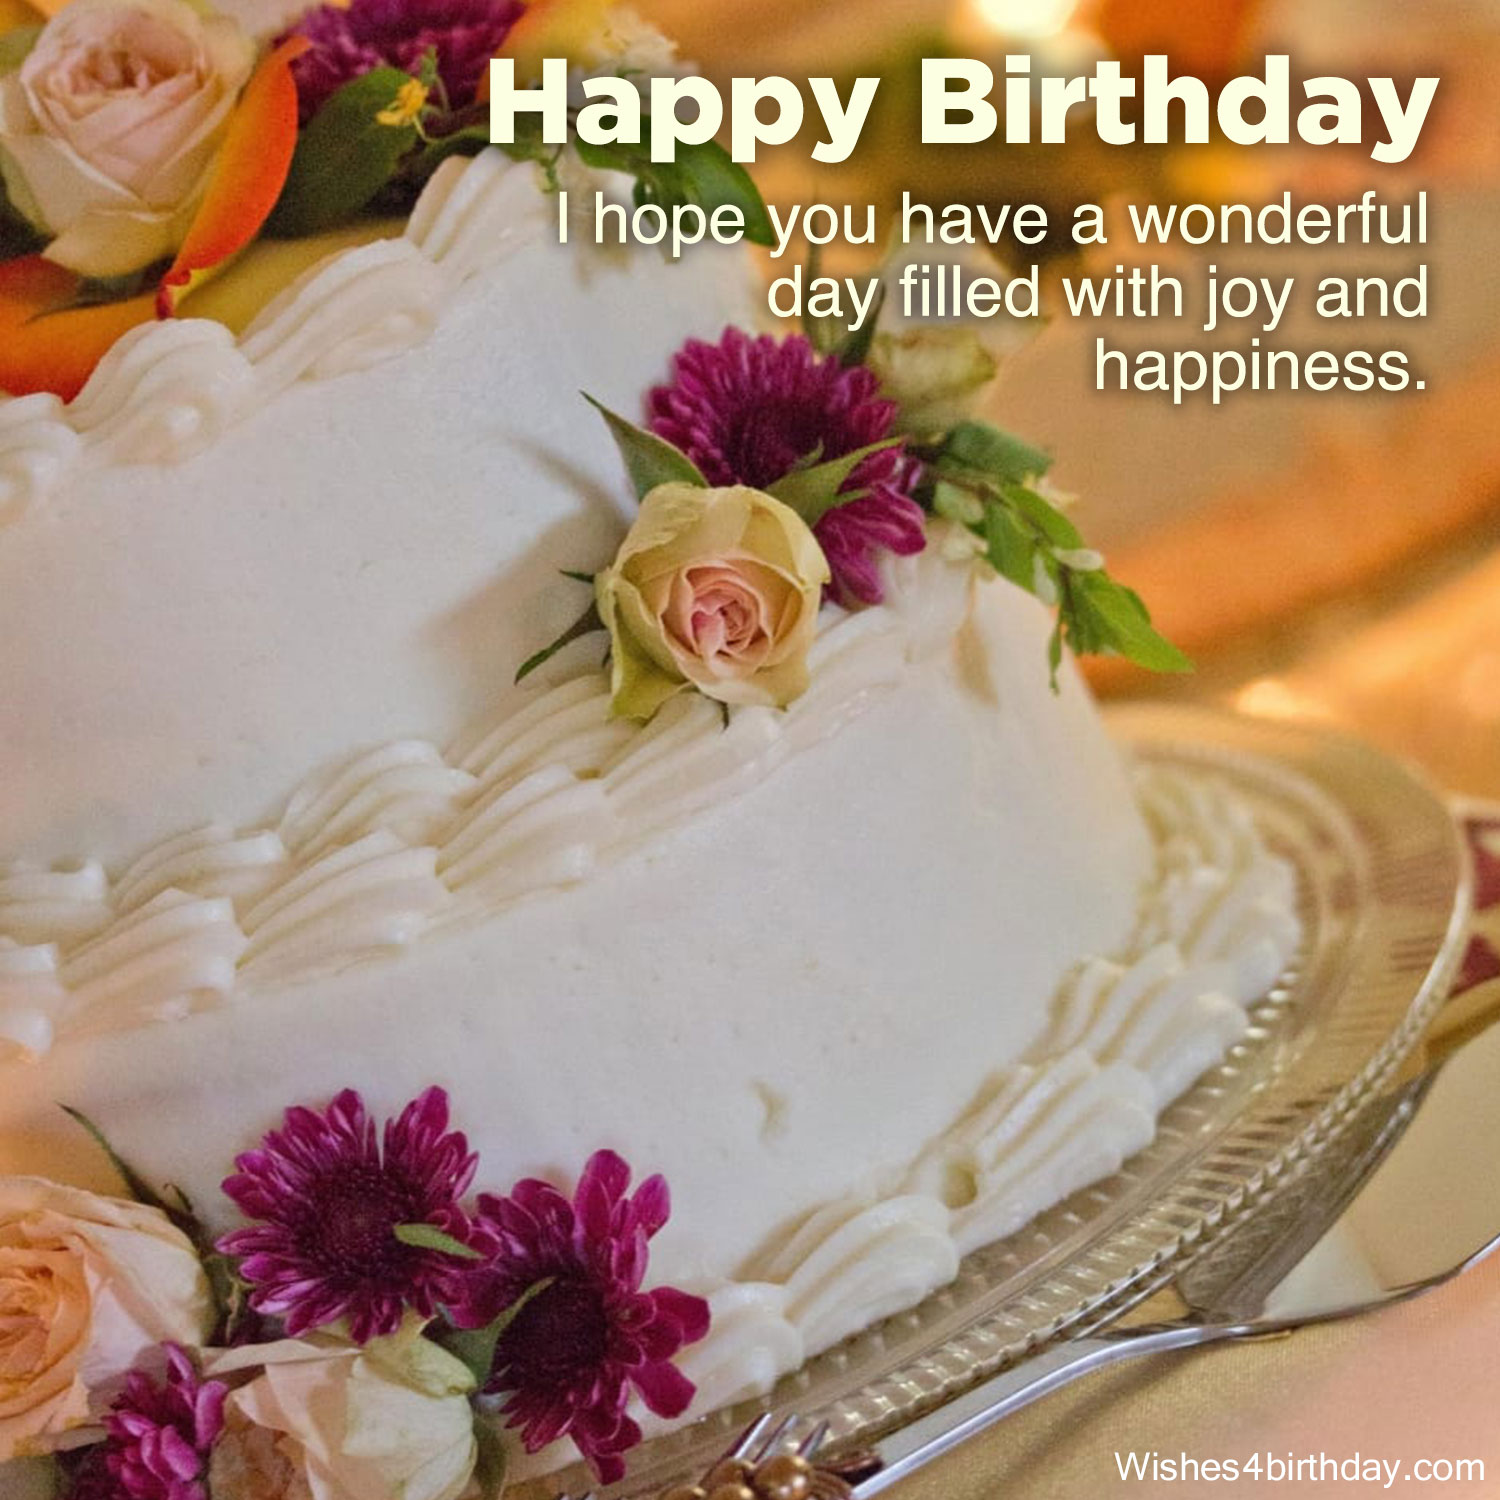 Gluten-Free Birthday Celebration Chocolate Cake | We Take The Cake®